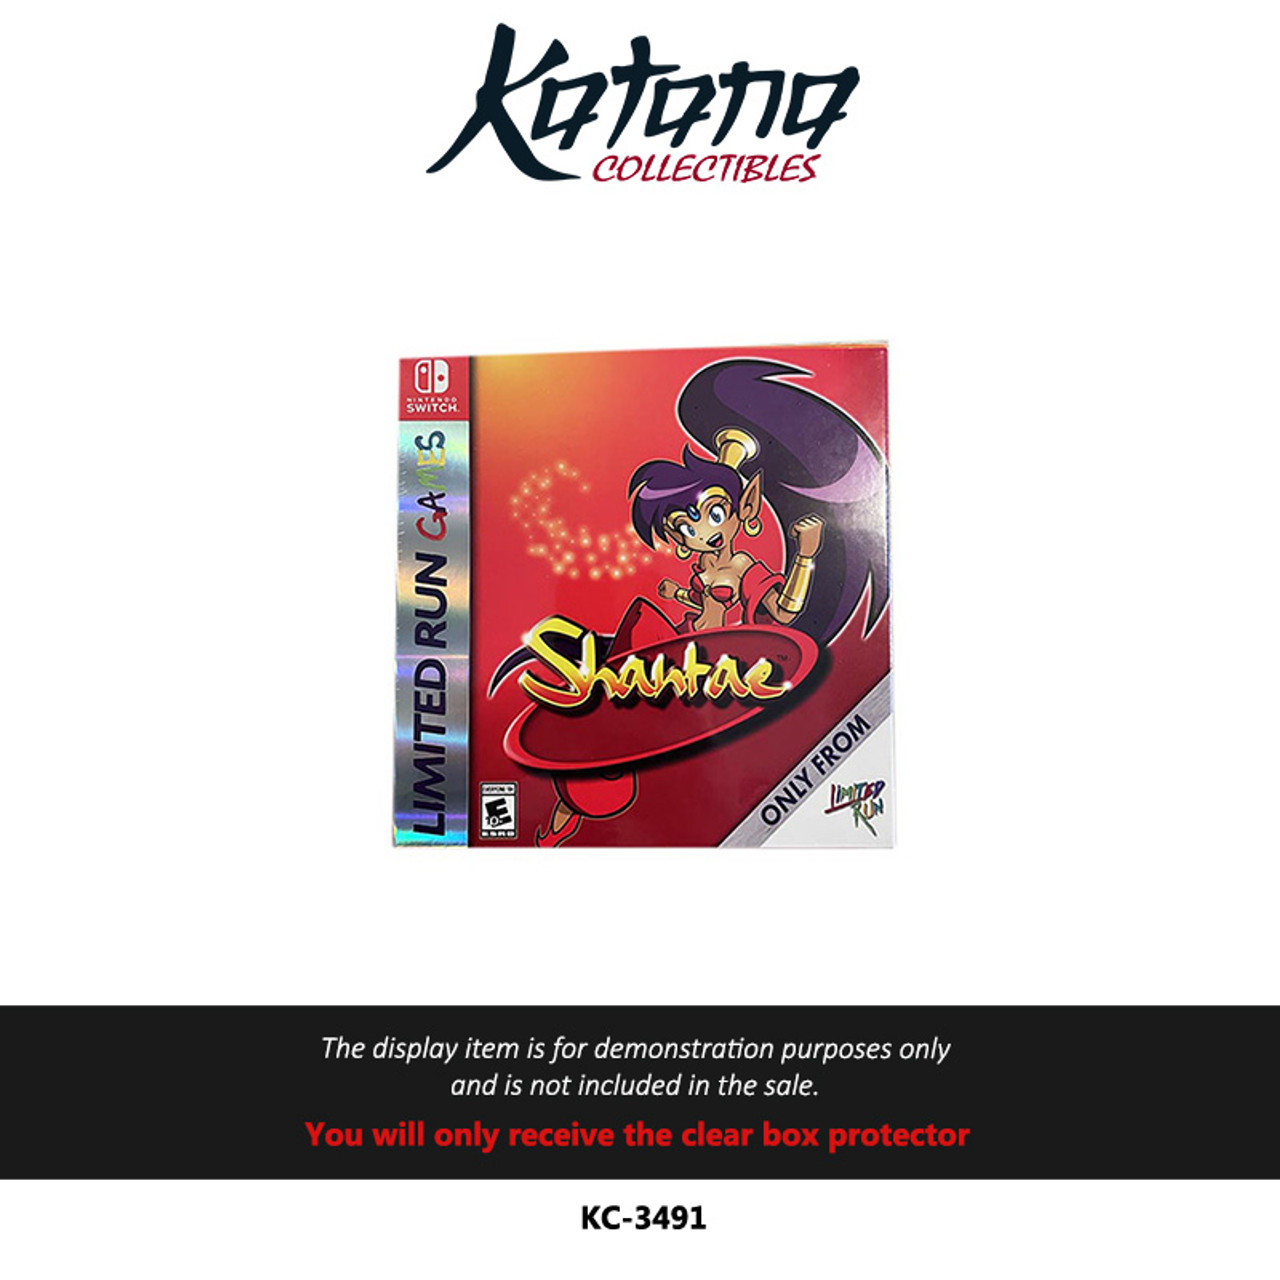 Katana Collectibles Protector For Shantae Retro Box Edition Limited Run #83 Switch